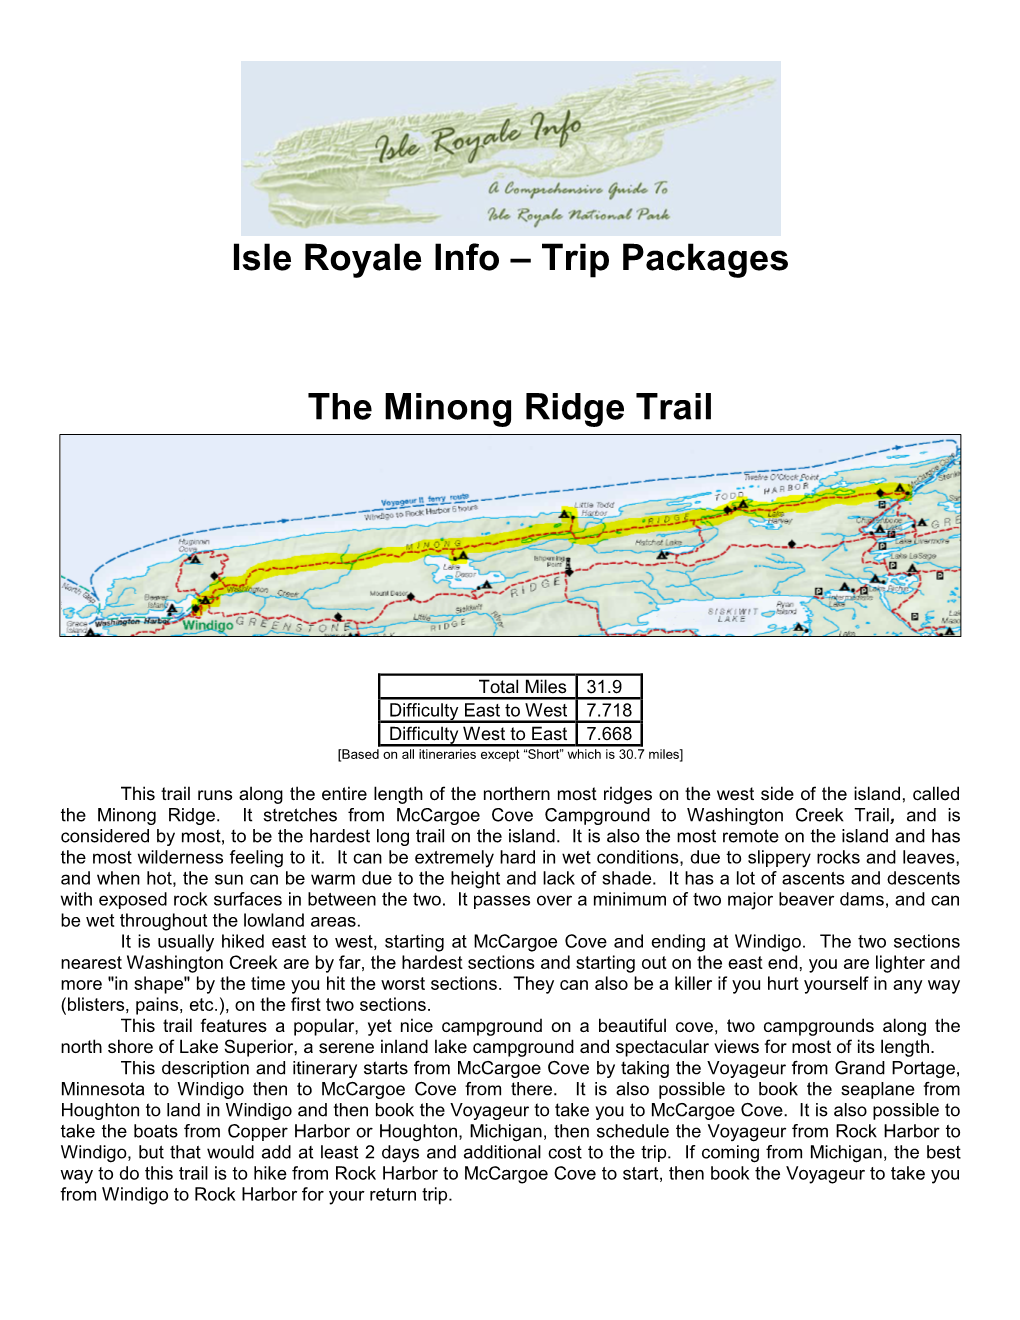 Trip Packages the Minong Ridge Trail